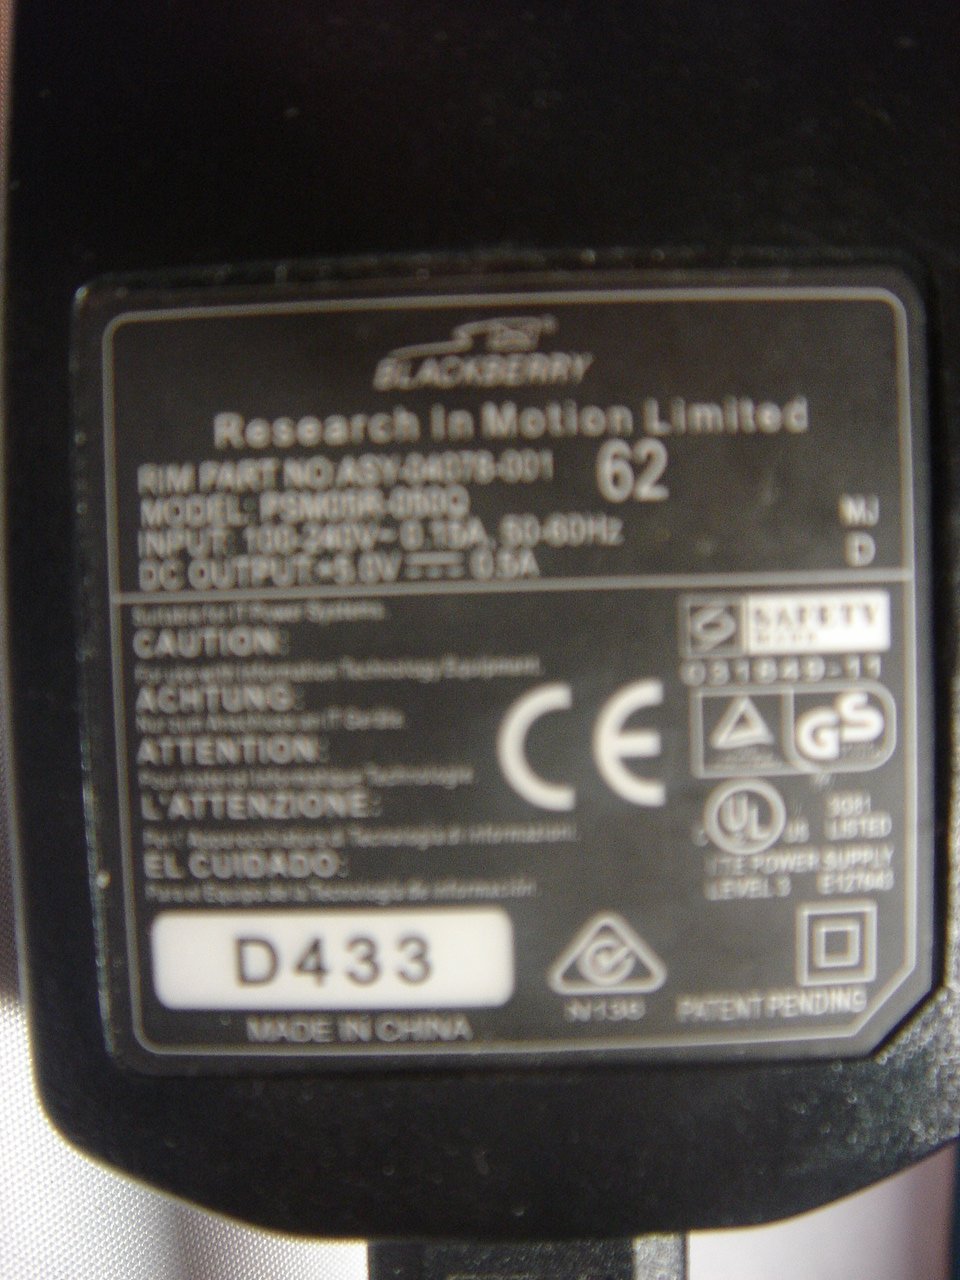 PR02760_PSM05R-050Q_Blackberry Mains Charger In 100-240v 0.15a Out 5v - Image2